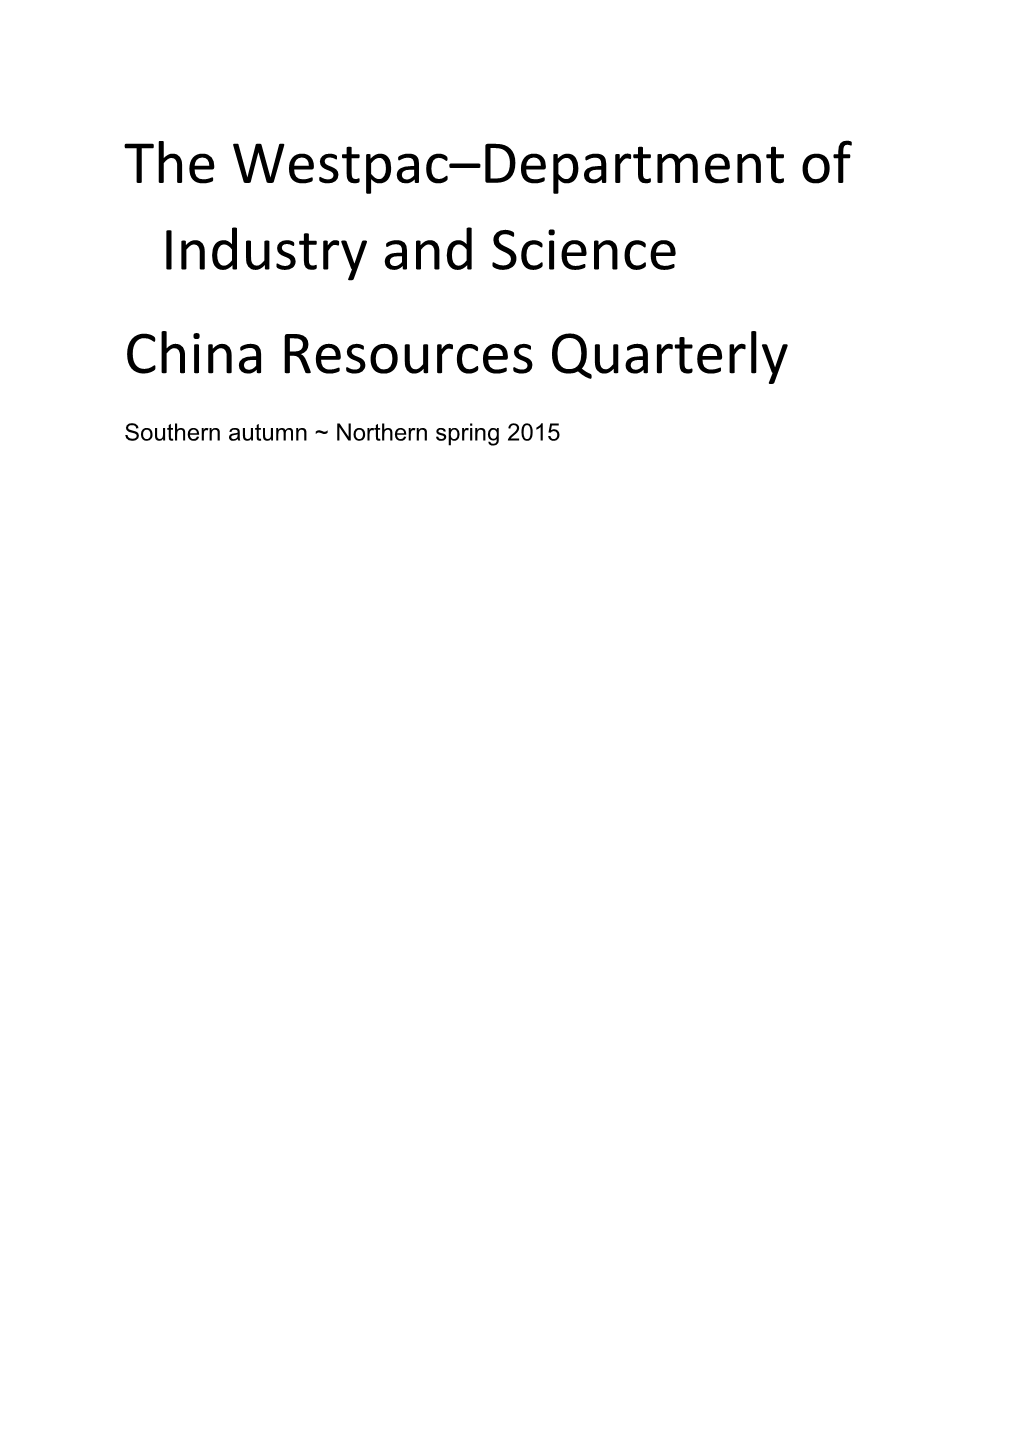 China Resources Quarterly